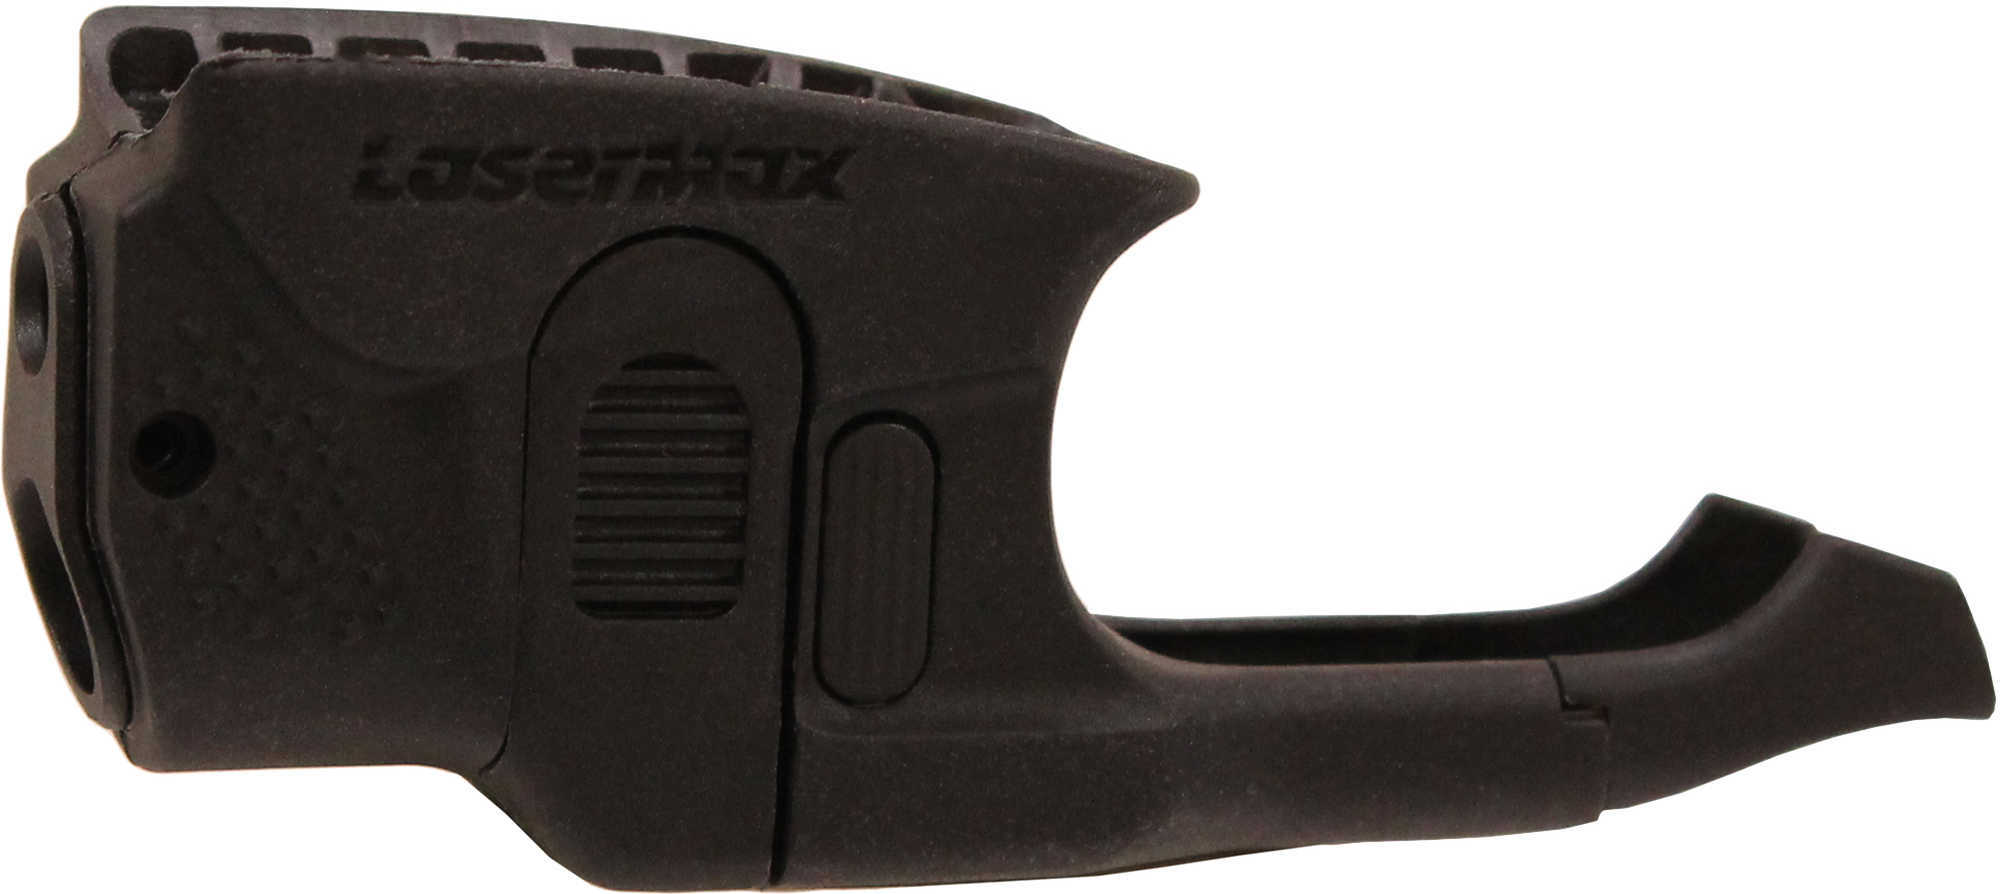 LaserMax Centerfire Lght/Laser Green w/GripSense for Glock 42/43